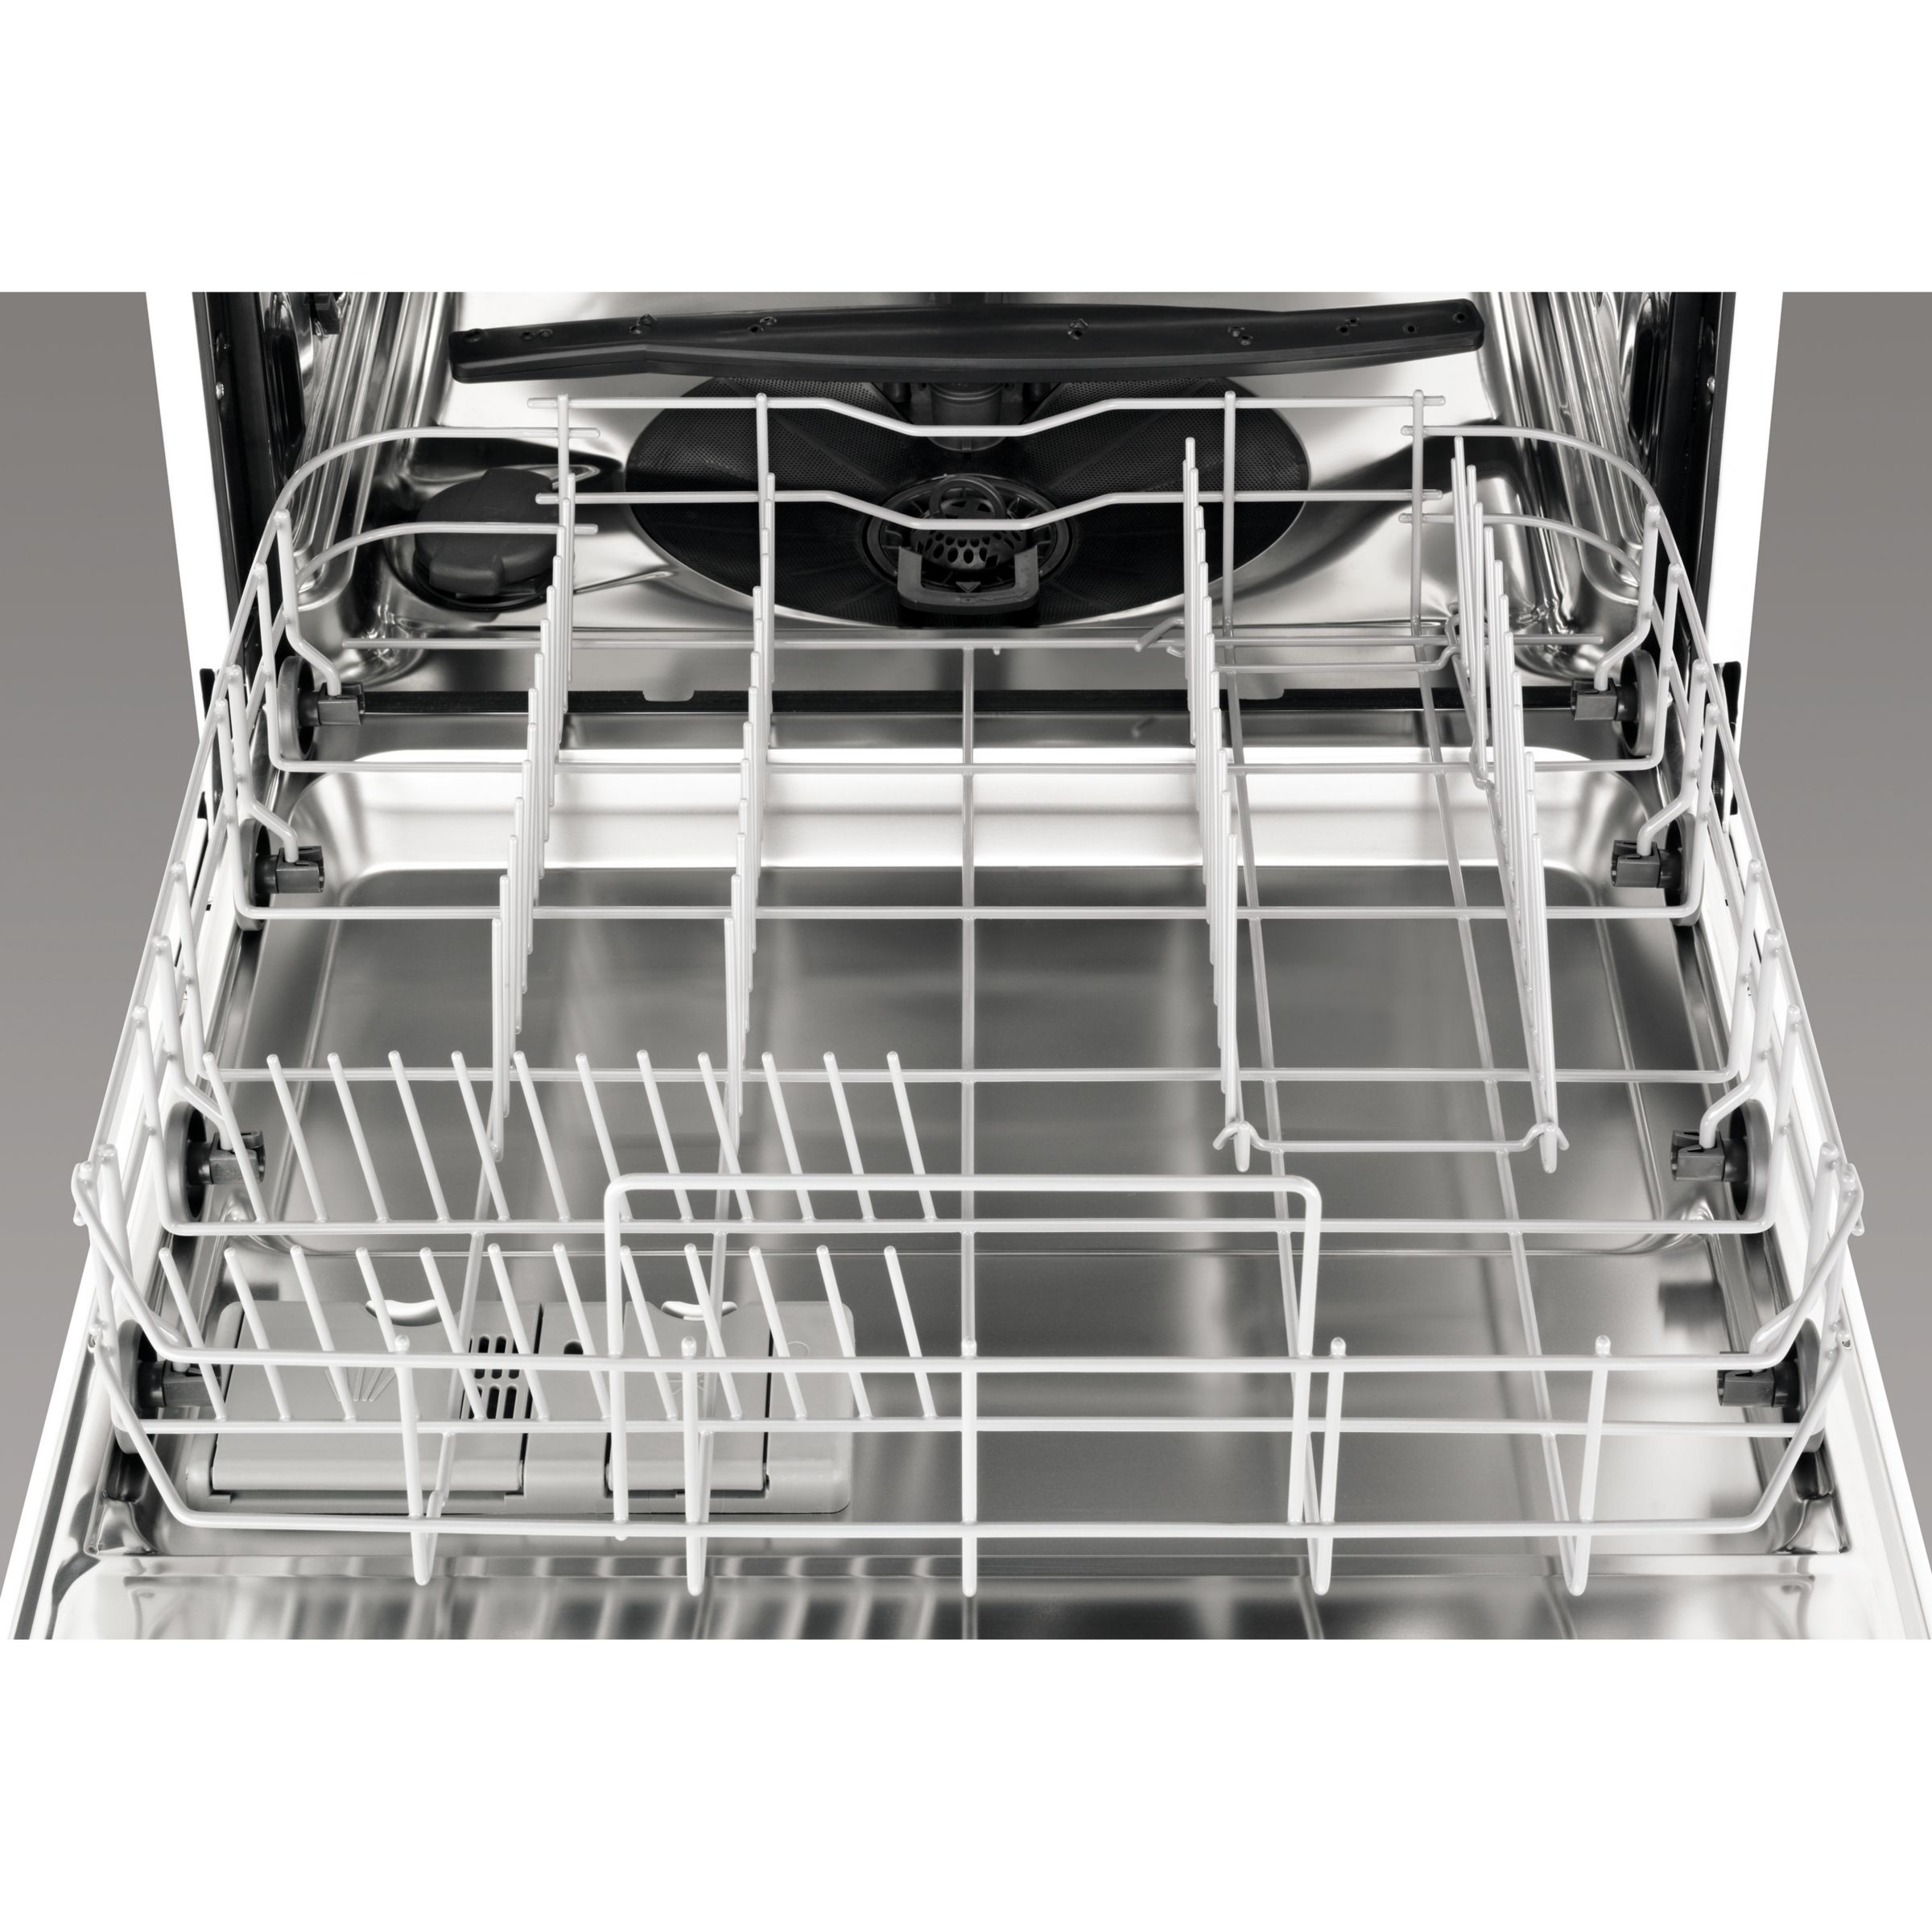 zanussi zdt21006fa integrated dishwasher